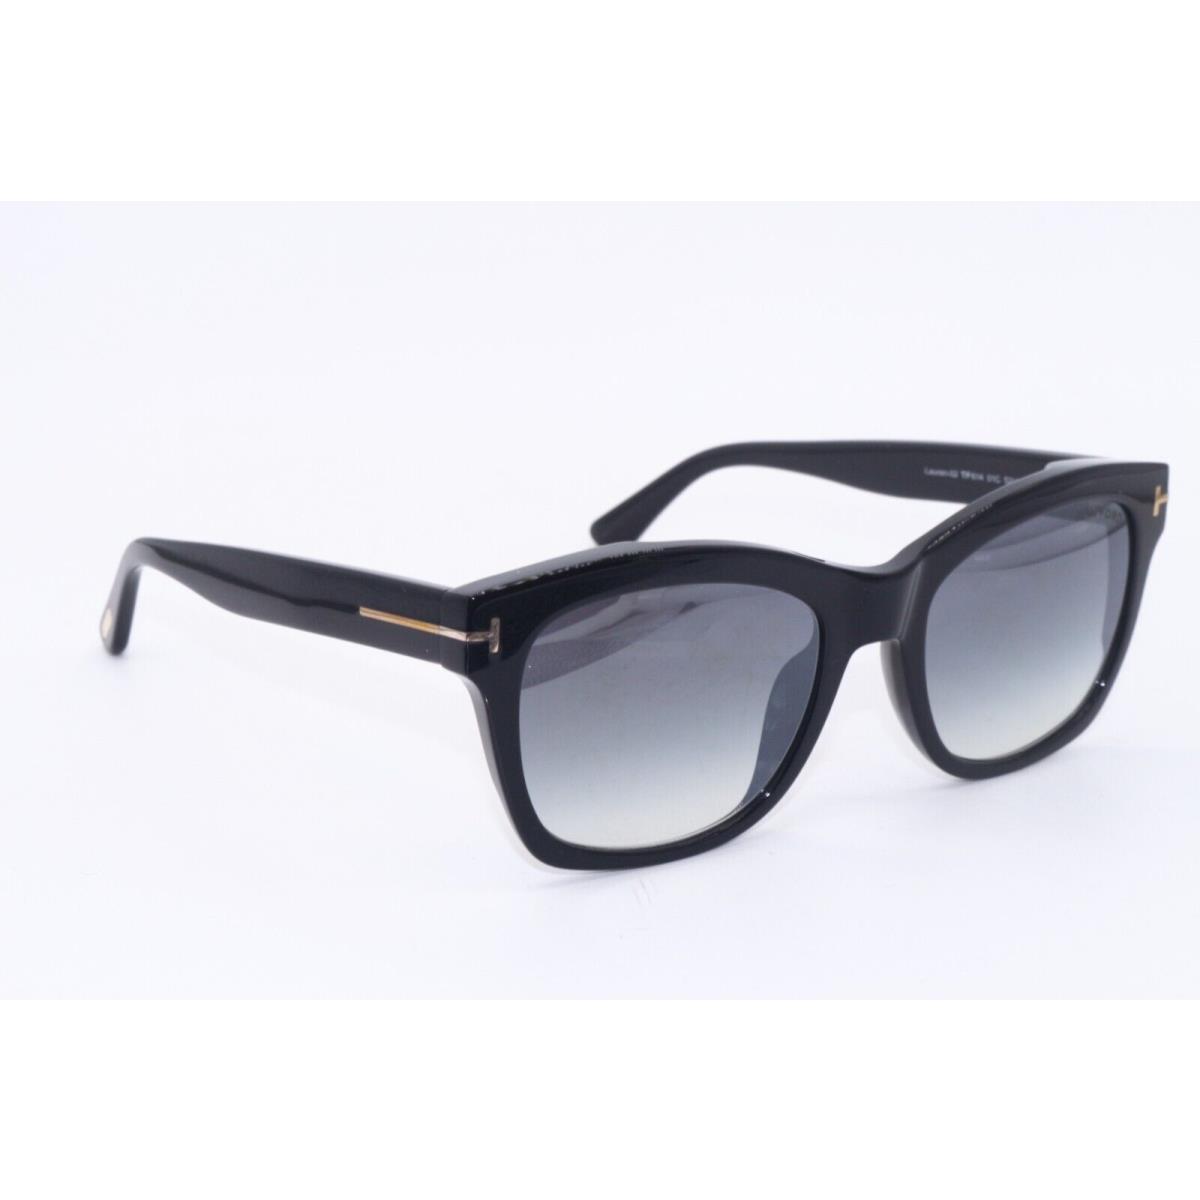 Tom Ford sunglasses  - Frame: Black, Lens: GREY 0